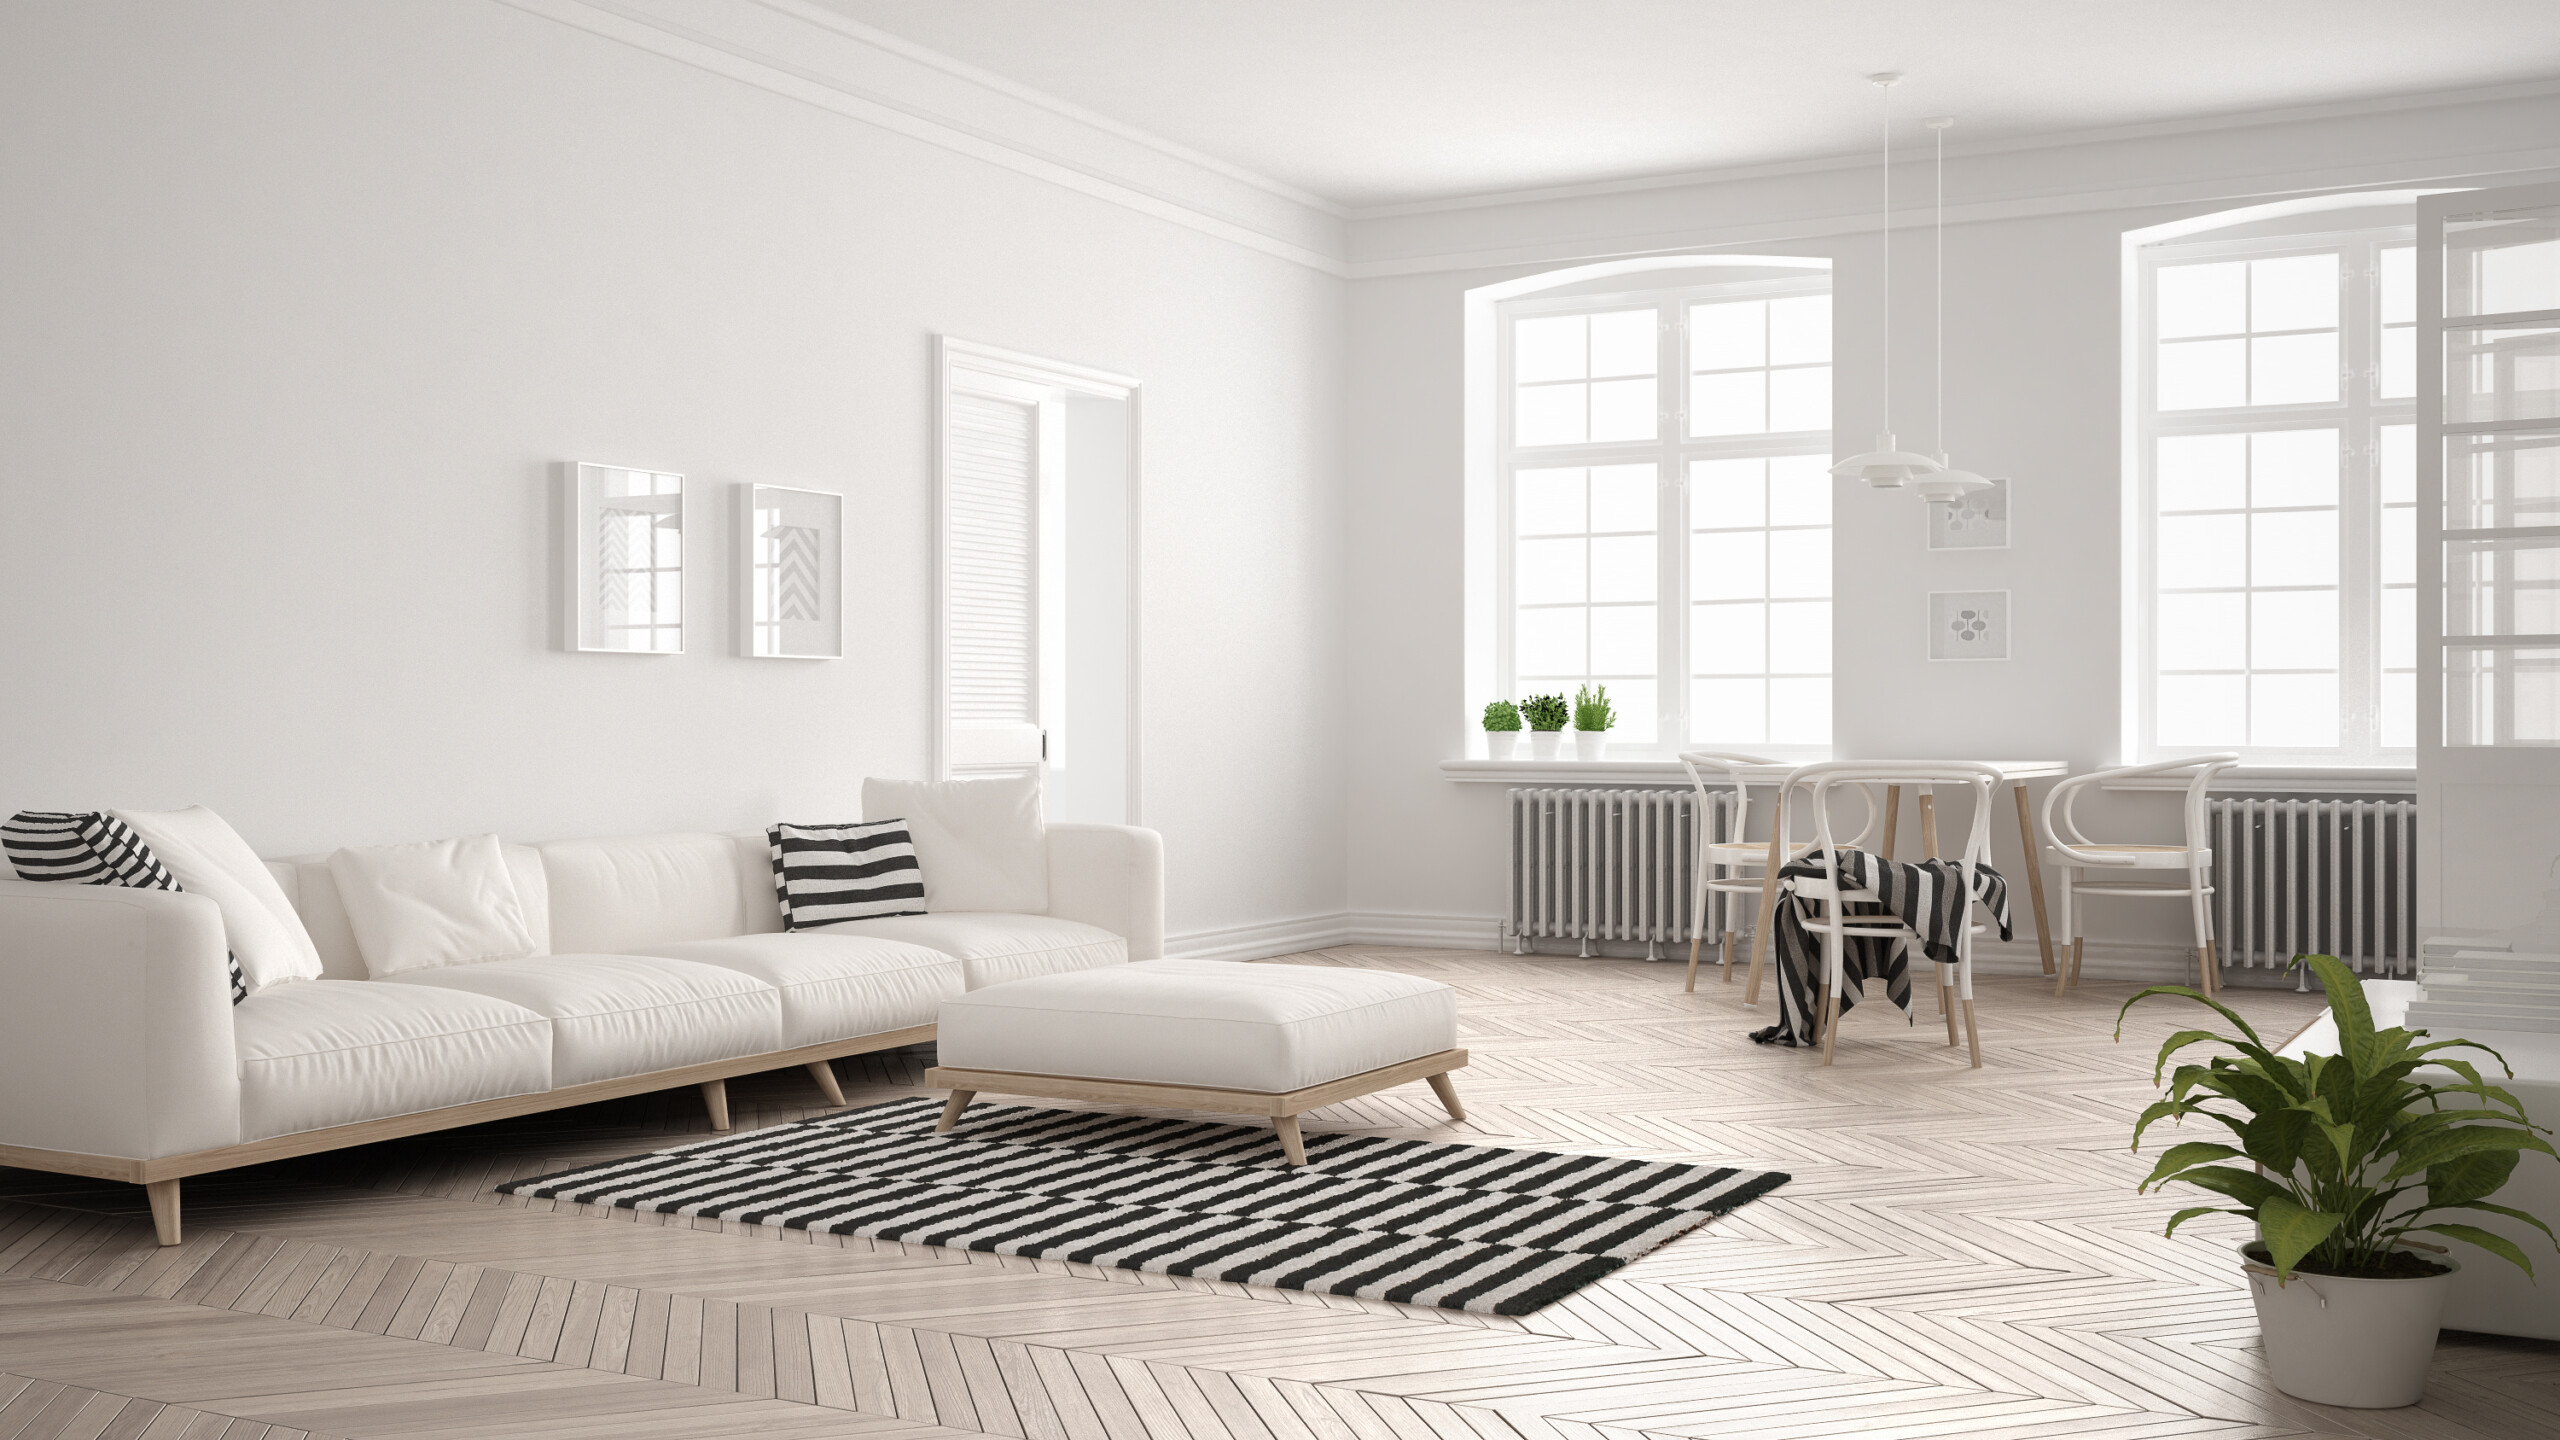 Interior modern minimalist house - airOlfe